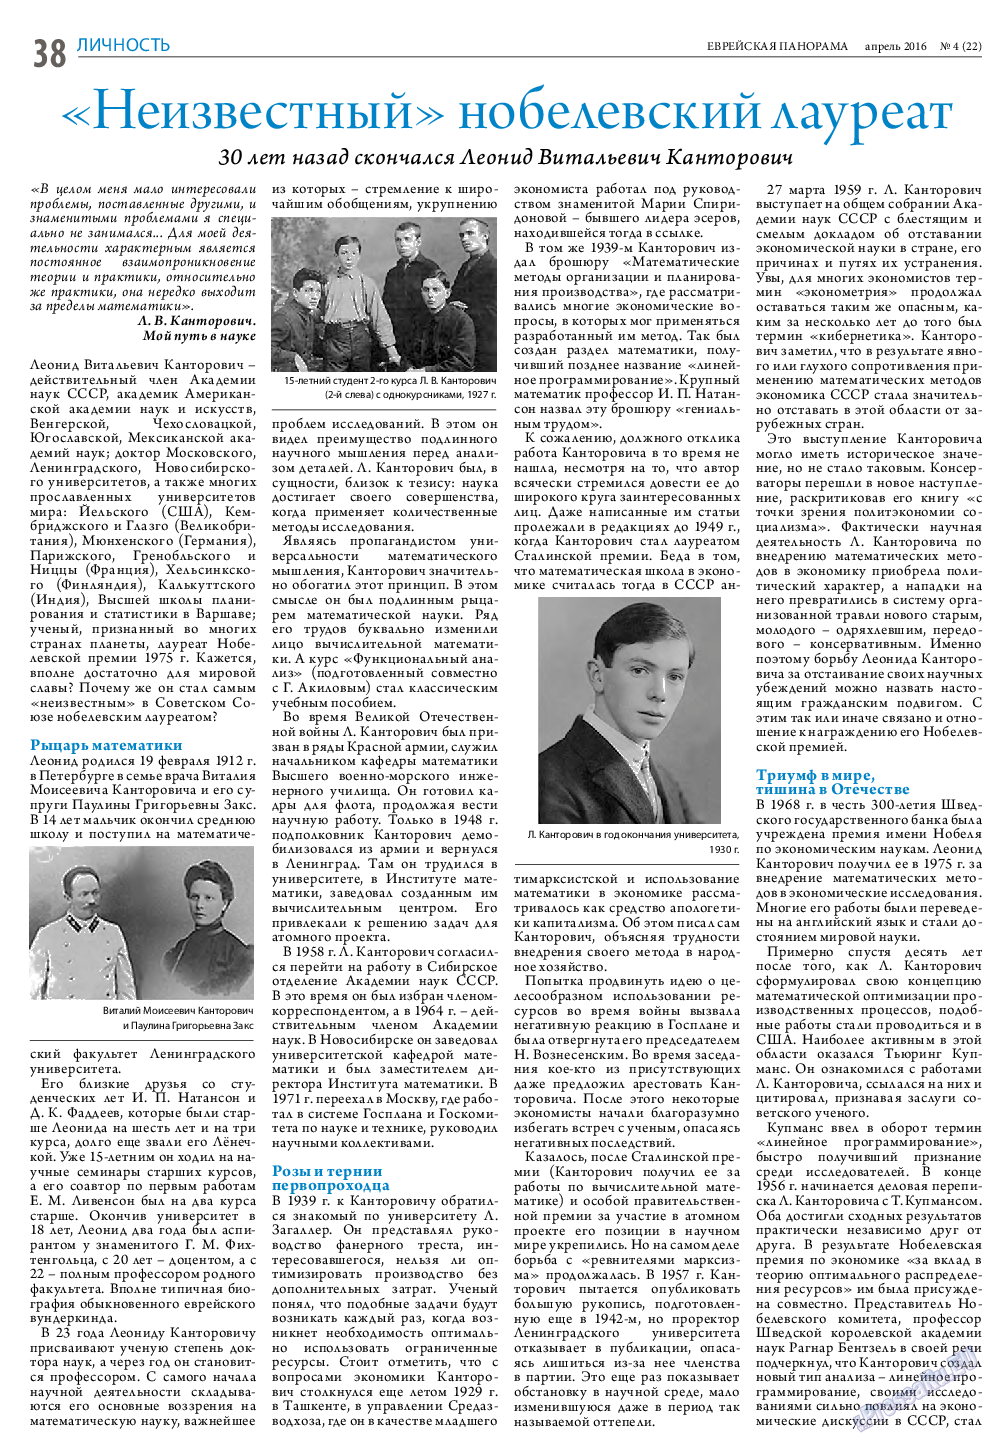 Еврейская панорама, газета. 2016 №4 стр.38